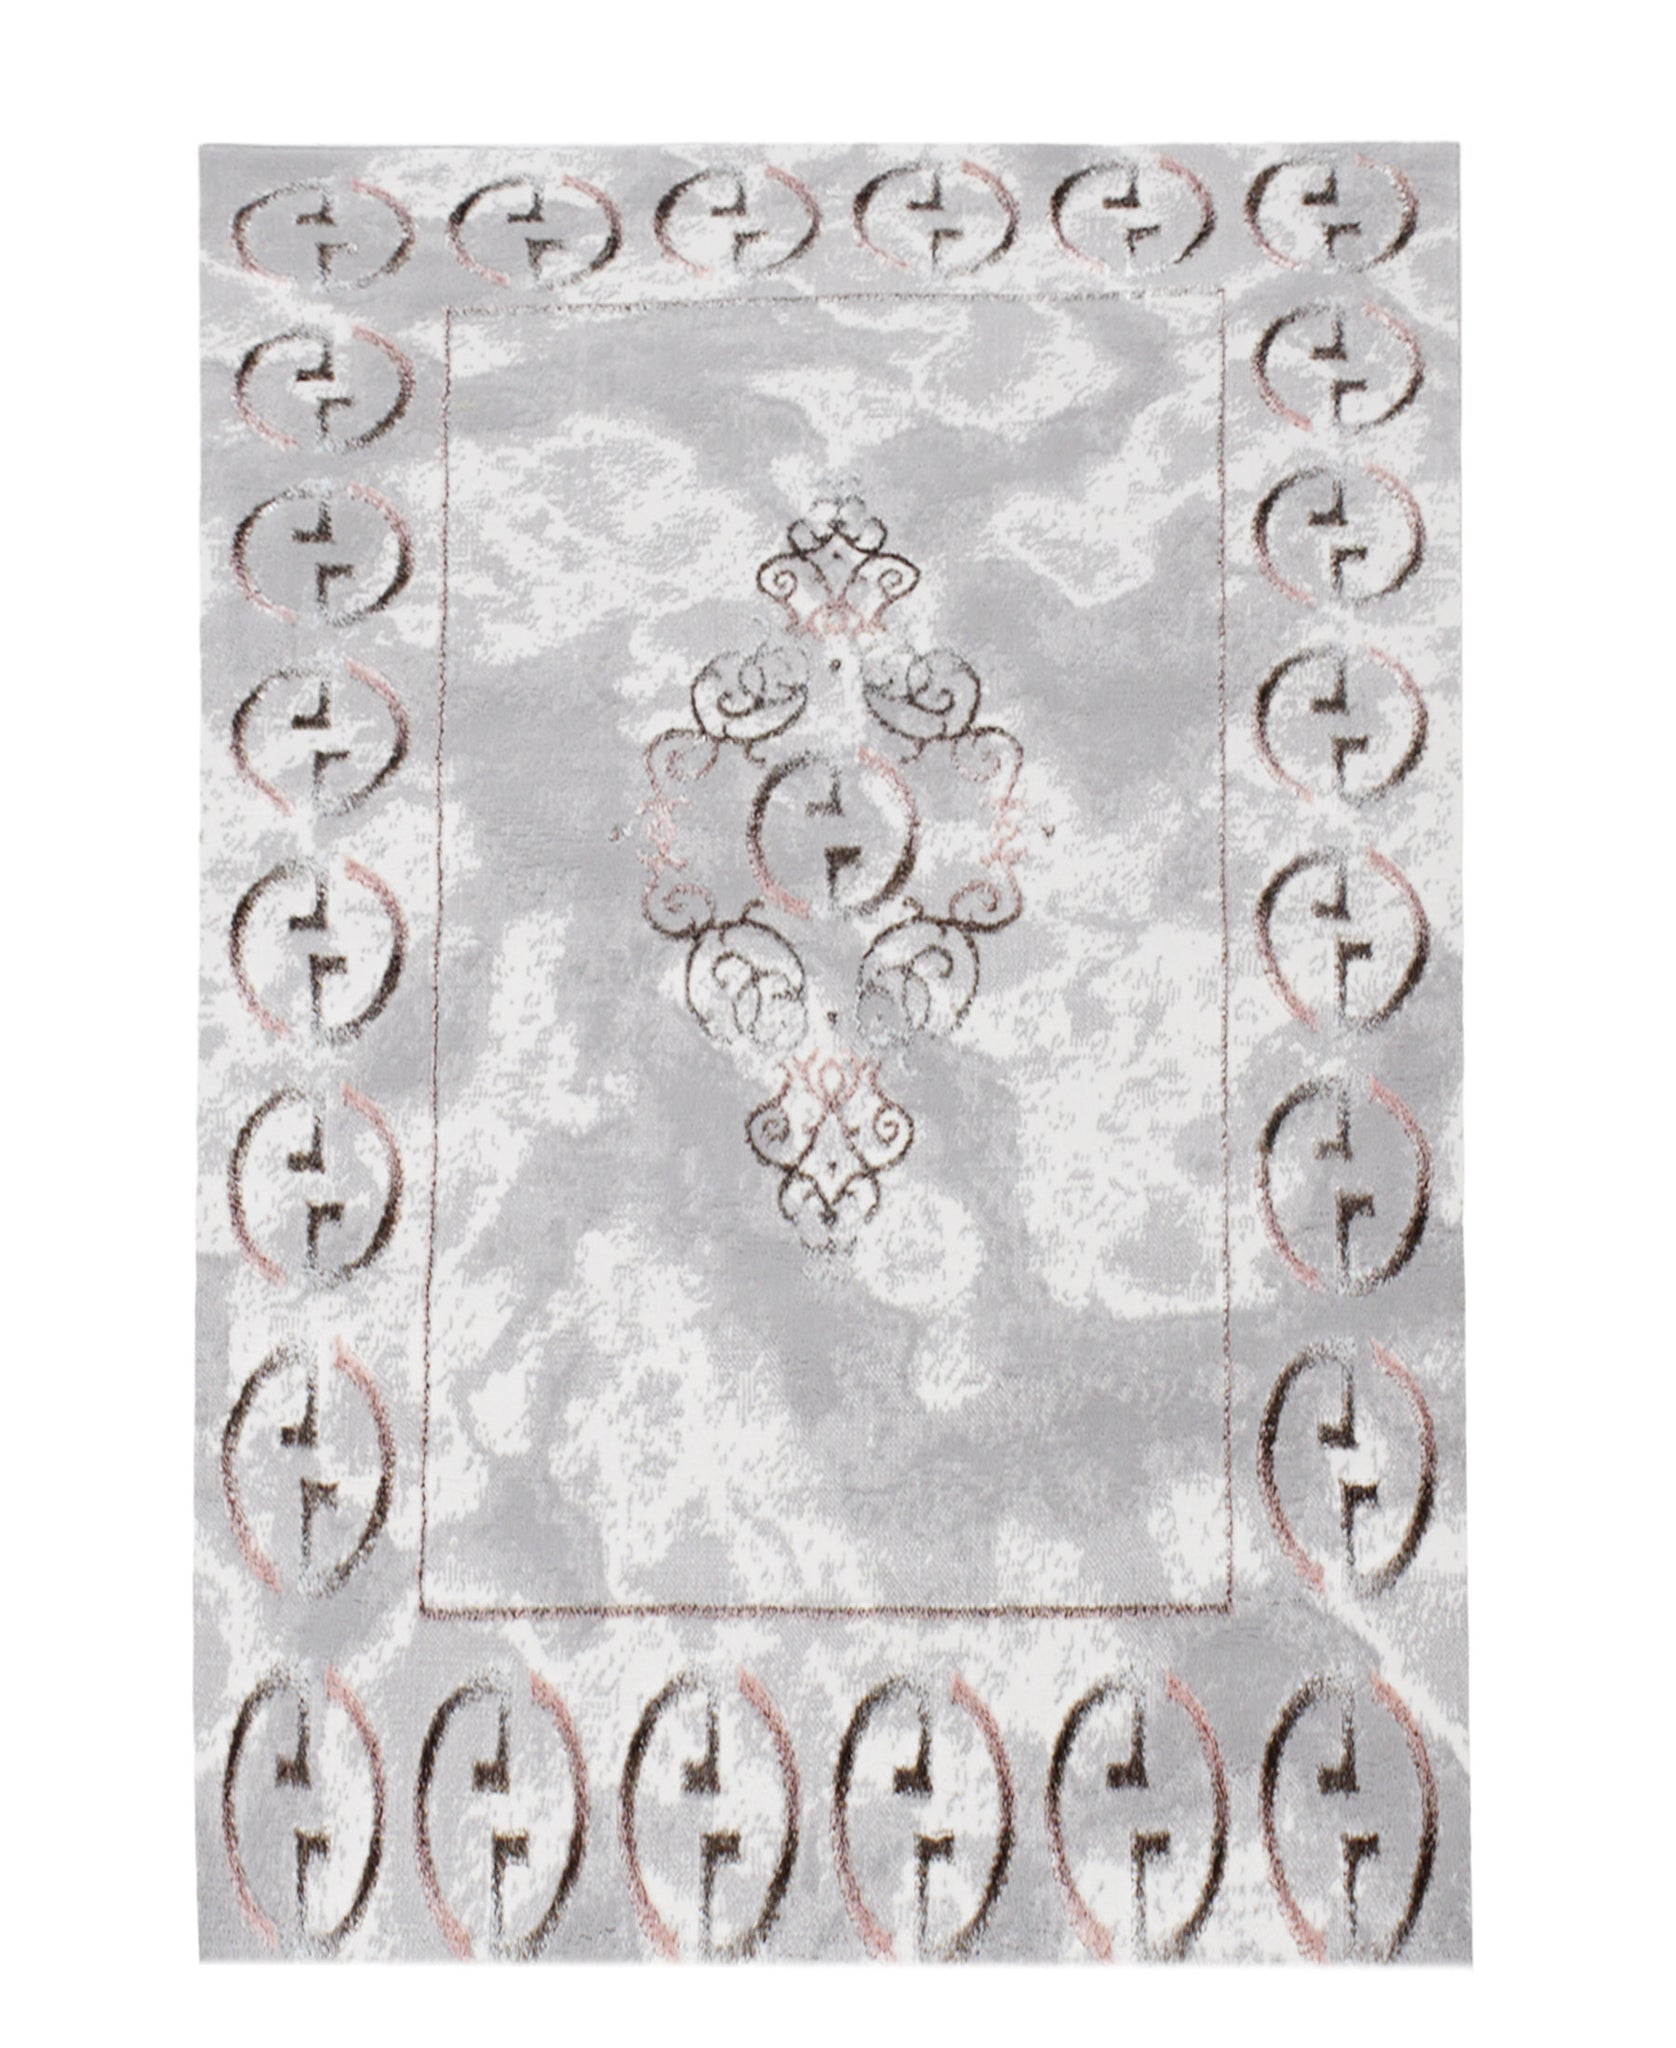 Bodrum Gucci Carpet 800mm X 1400mm - Grey